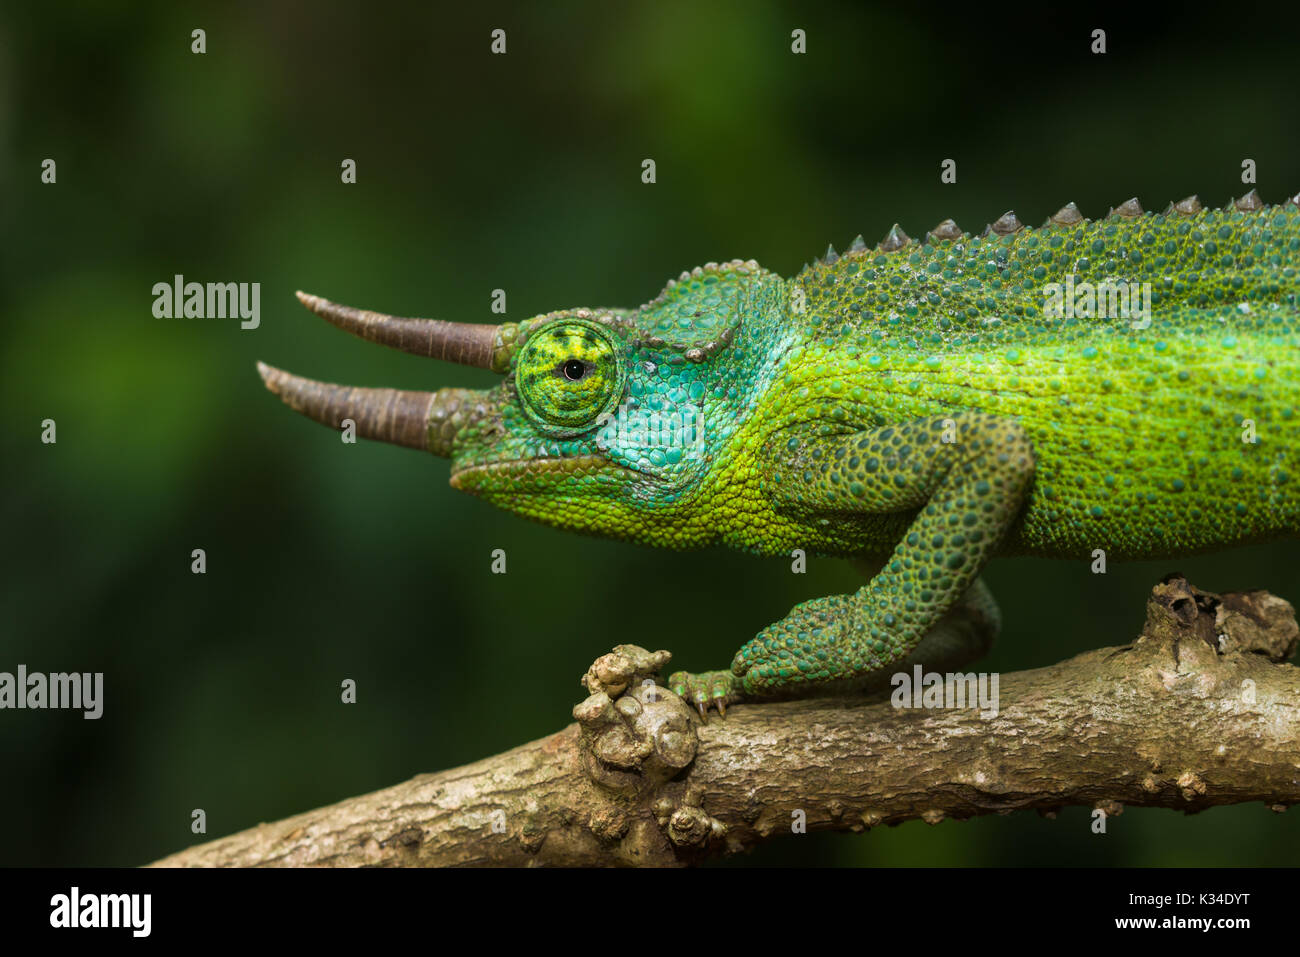 Adult male Jackson's chameleon (Trioceros jacksonii jacksonii) on branch Stock Photo